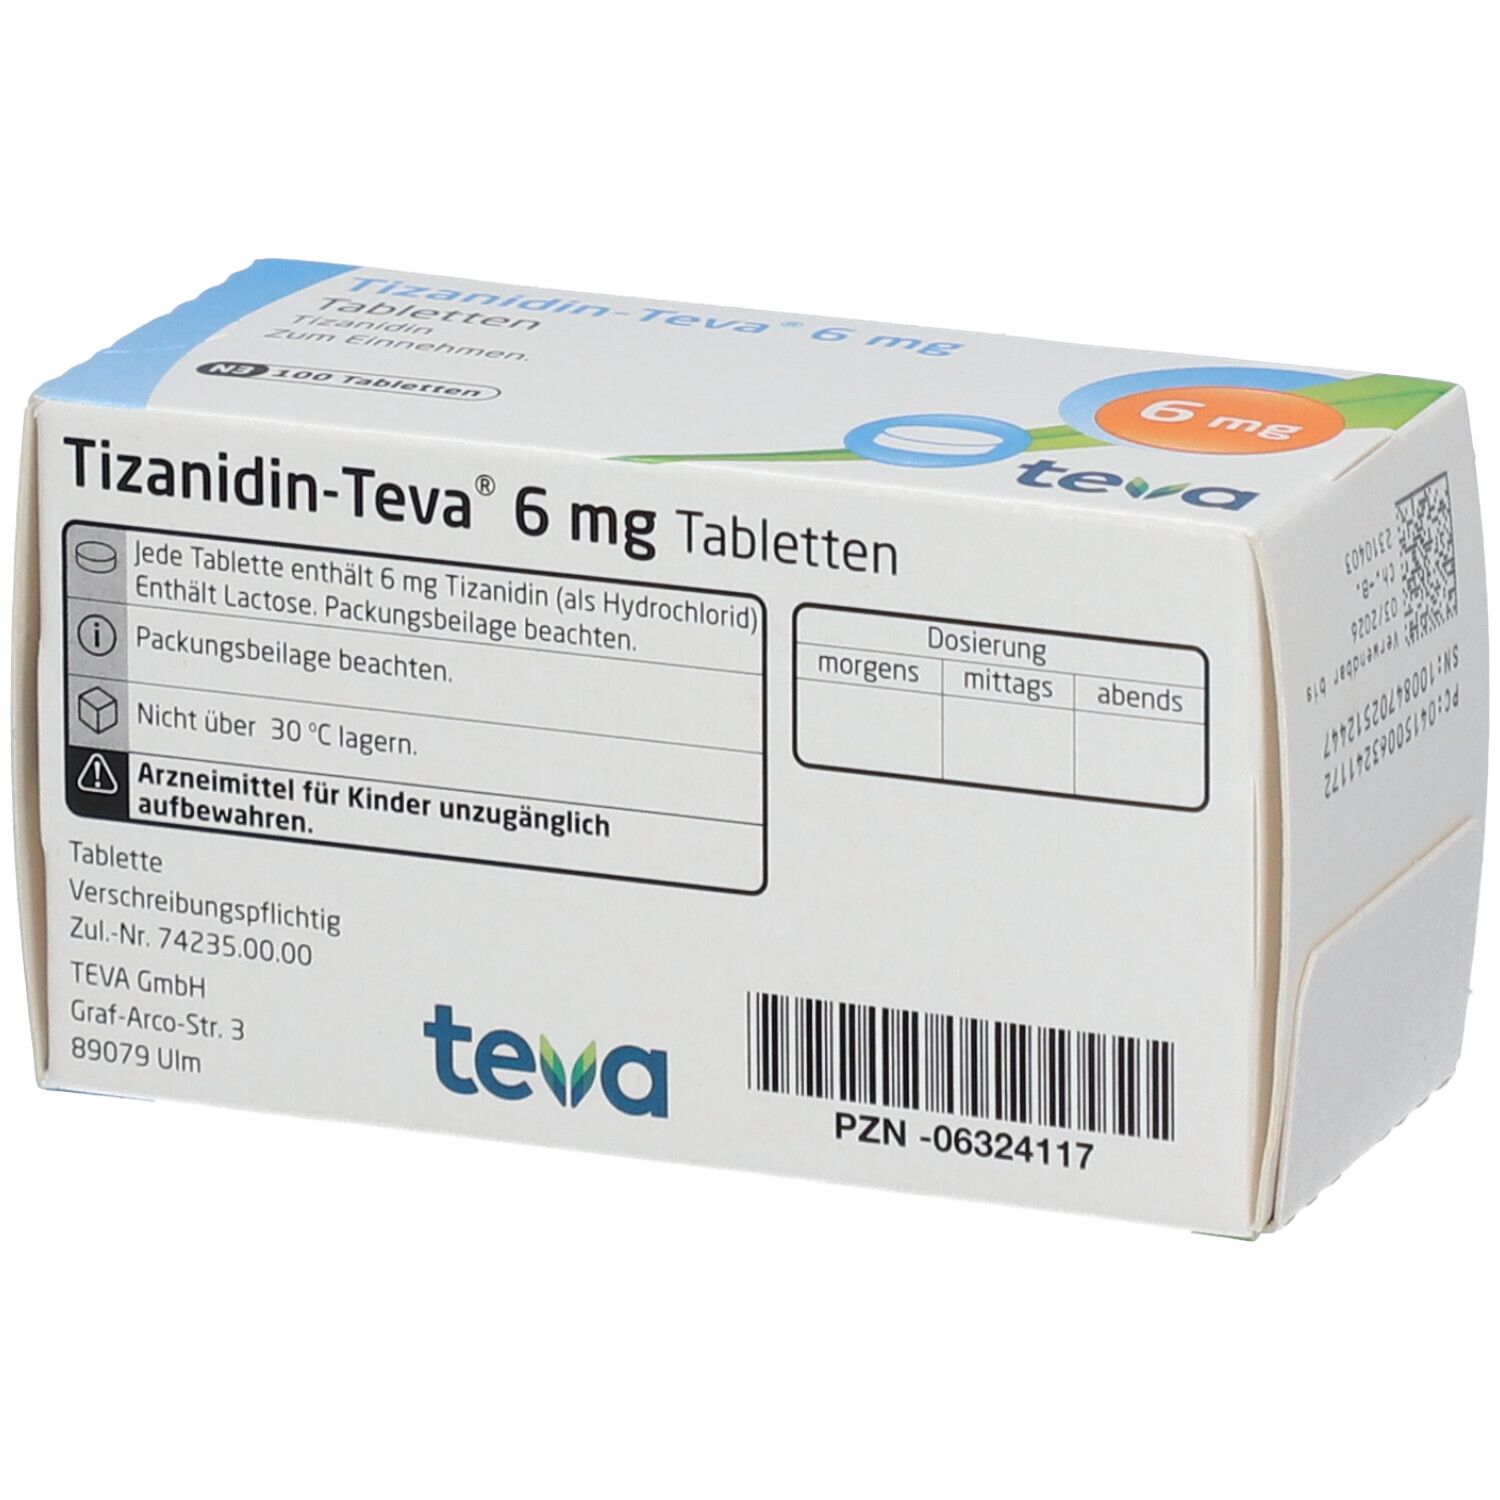 Tizanidin-TEVA® 6 mg